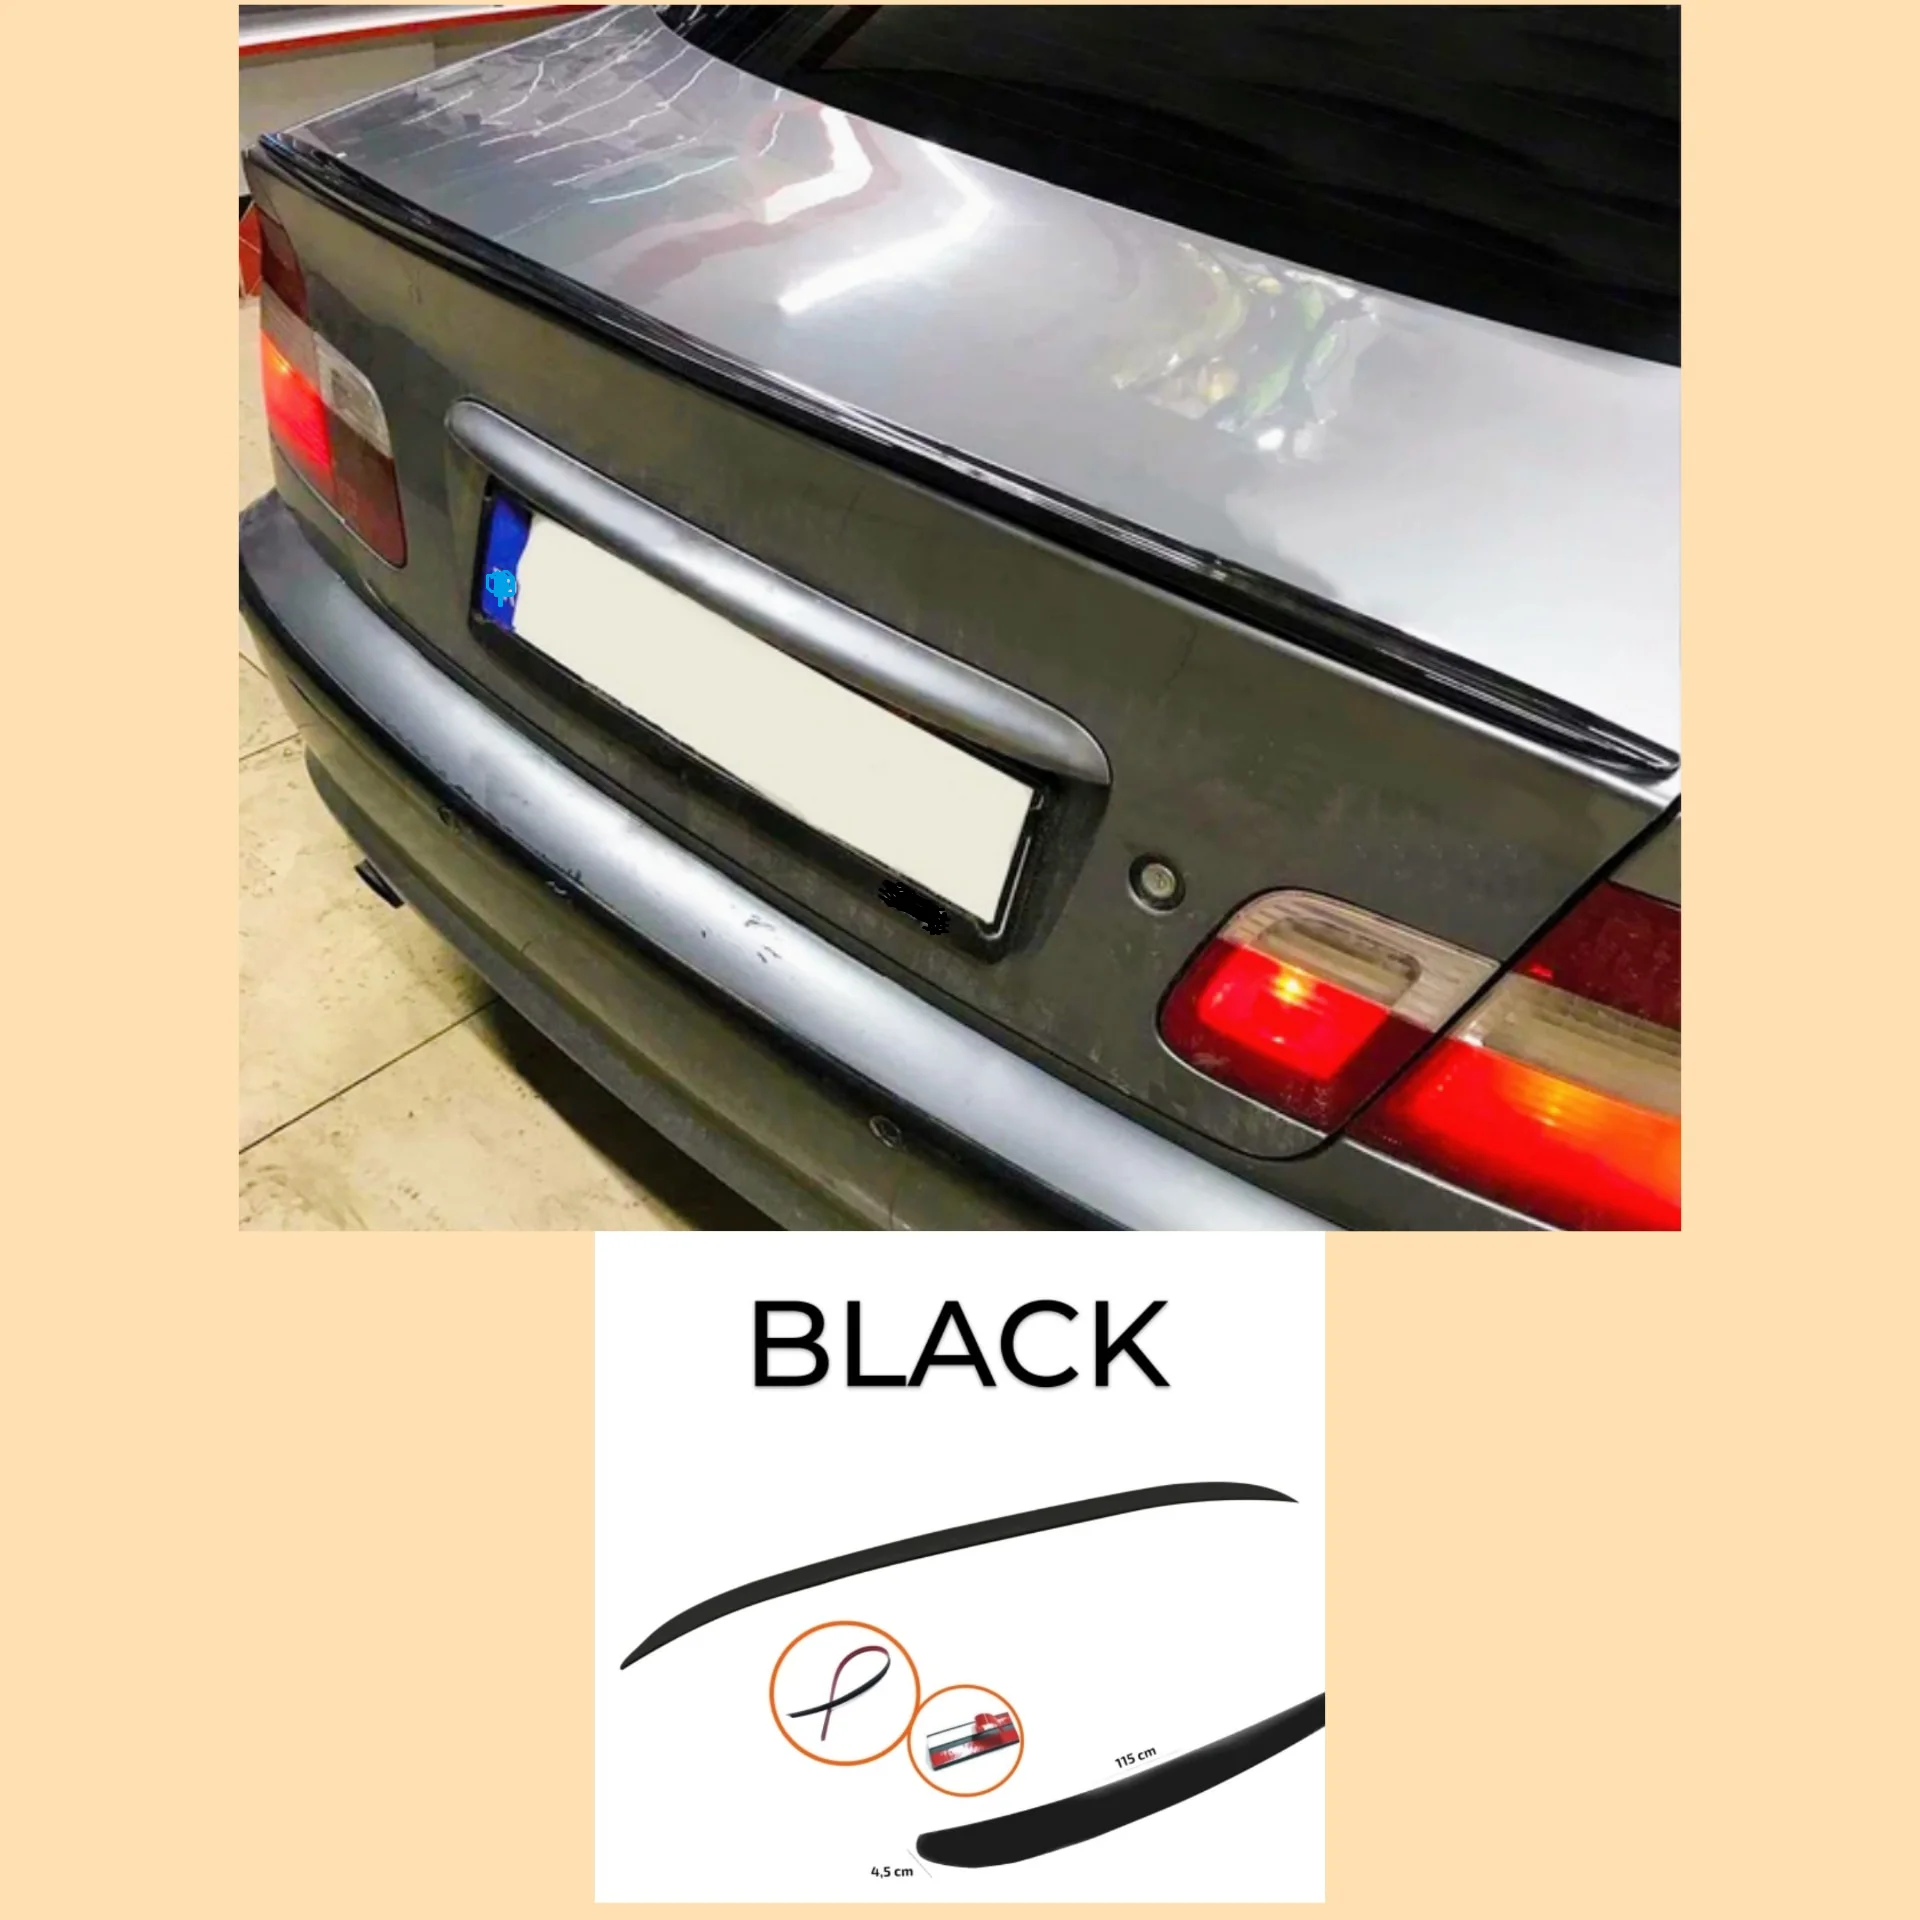 Alerón trasero para techo de coche, embellecedor de Spoiler ABS, color negro brillante, estilo 5D, para BMW E46 3 Series 1998 2005